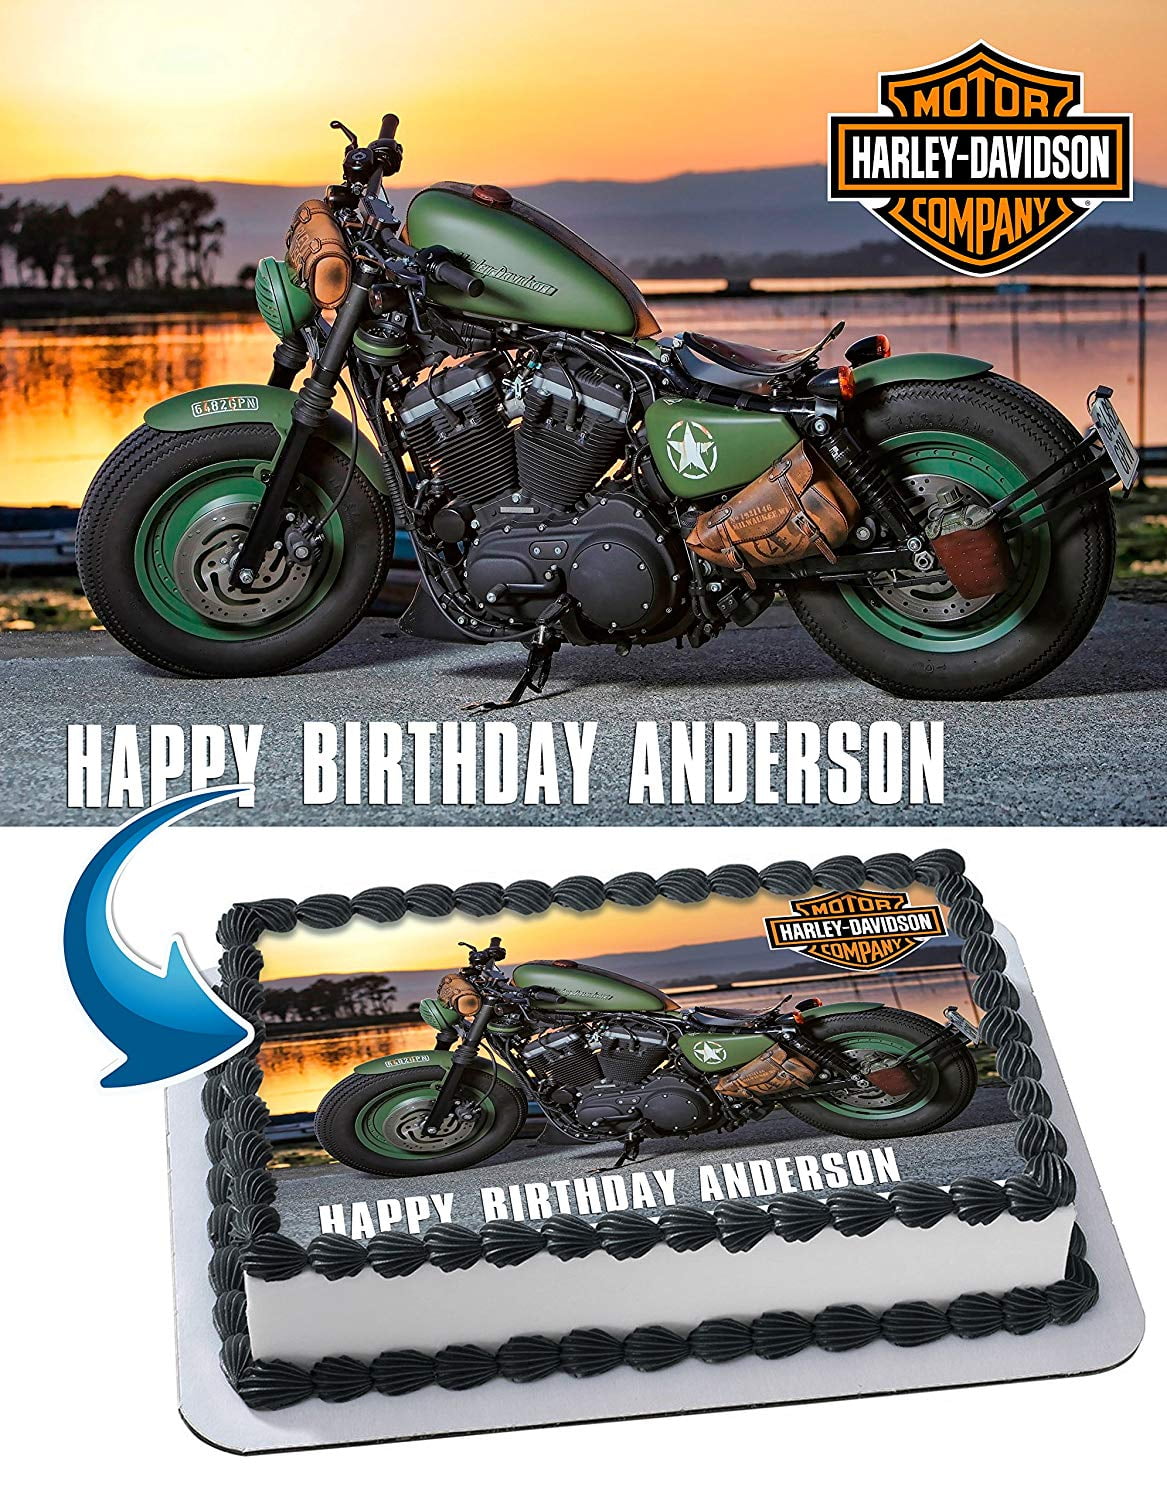 Harley Davidson Edible Cake Topper 11 7 X 17 5 Inches 1 2 Sheet Rectangular Walmart Com